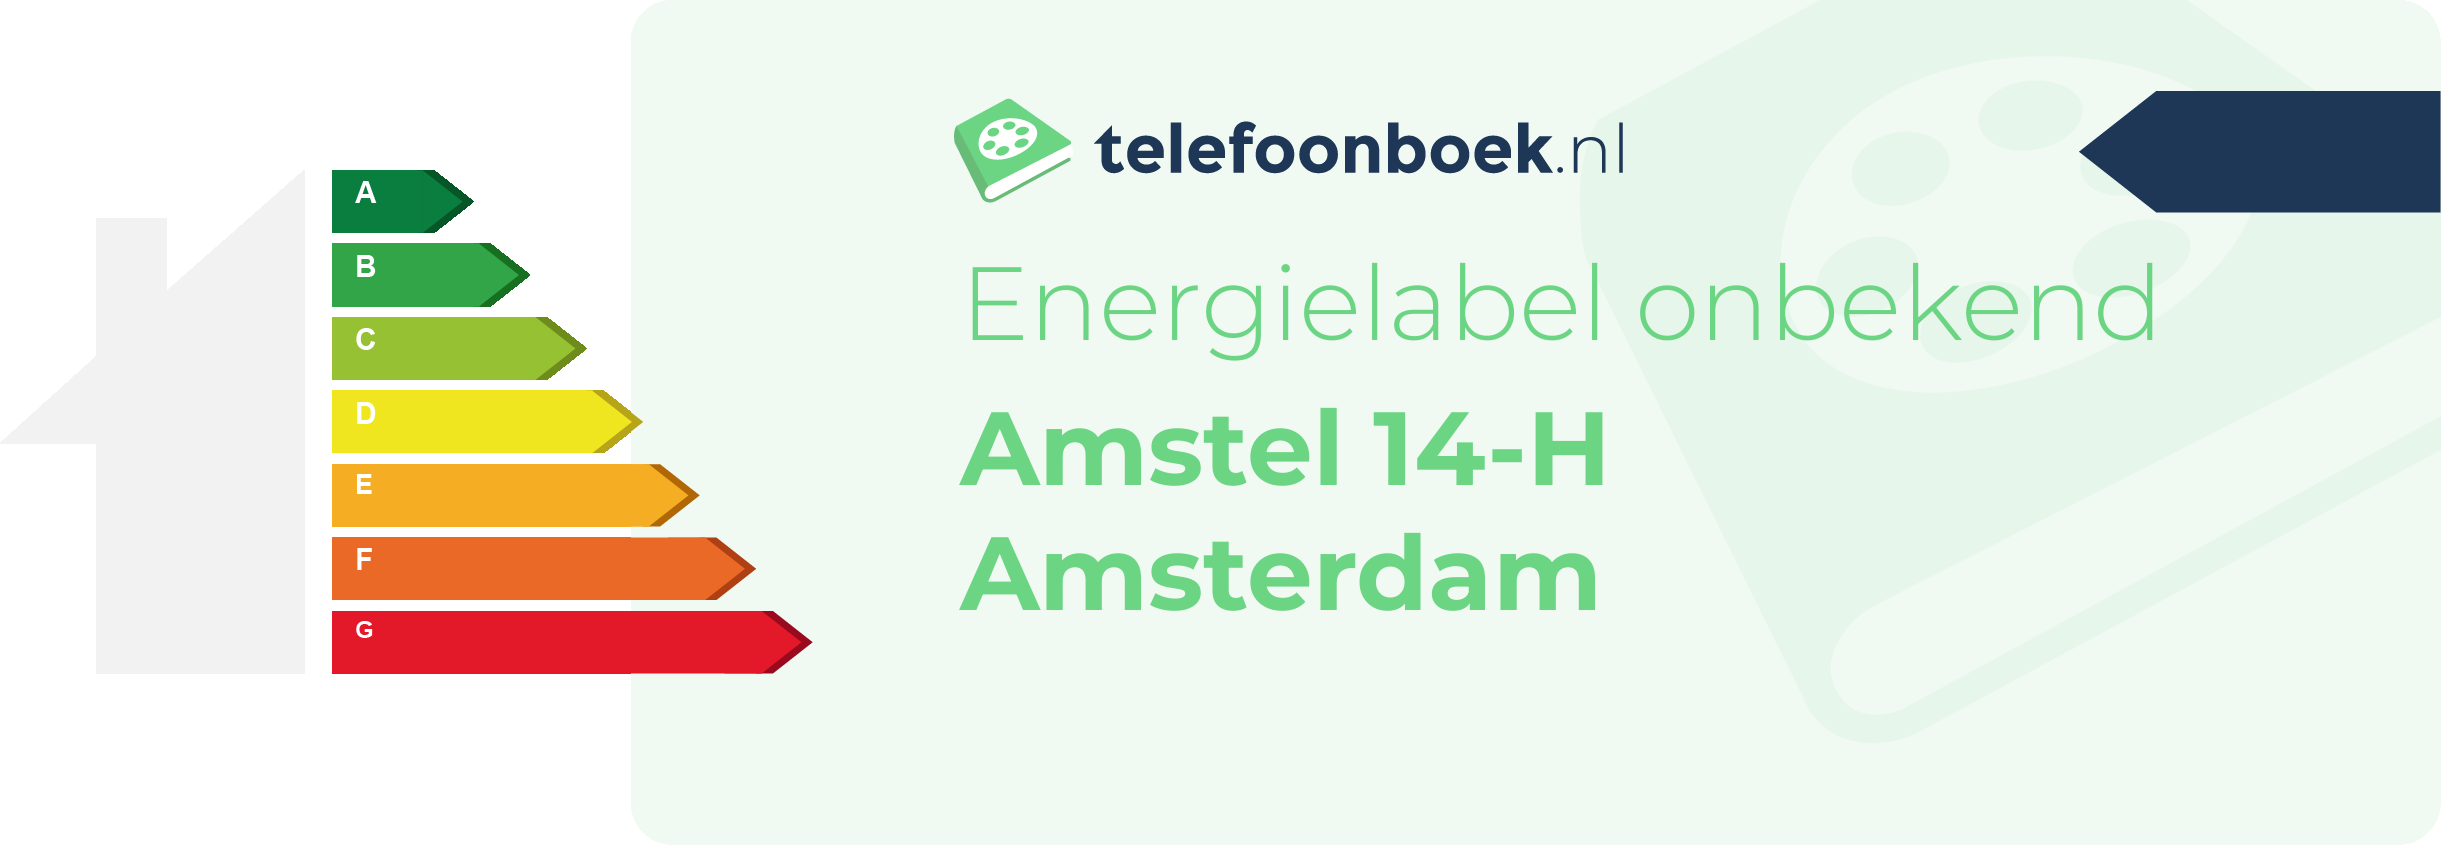 Energielabel Amstel 14-H Amsterdam